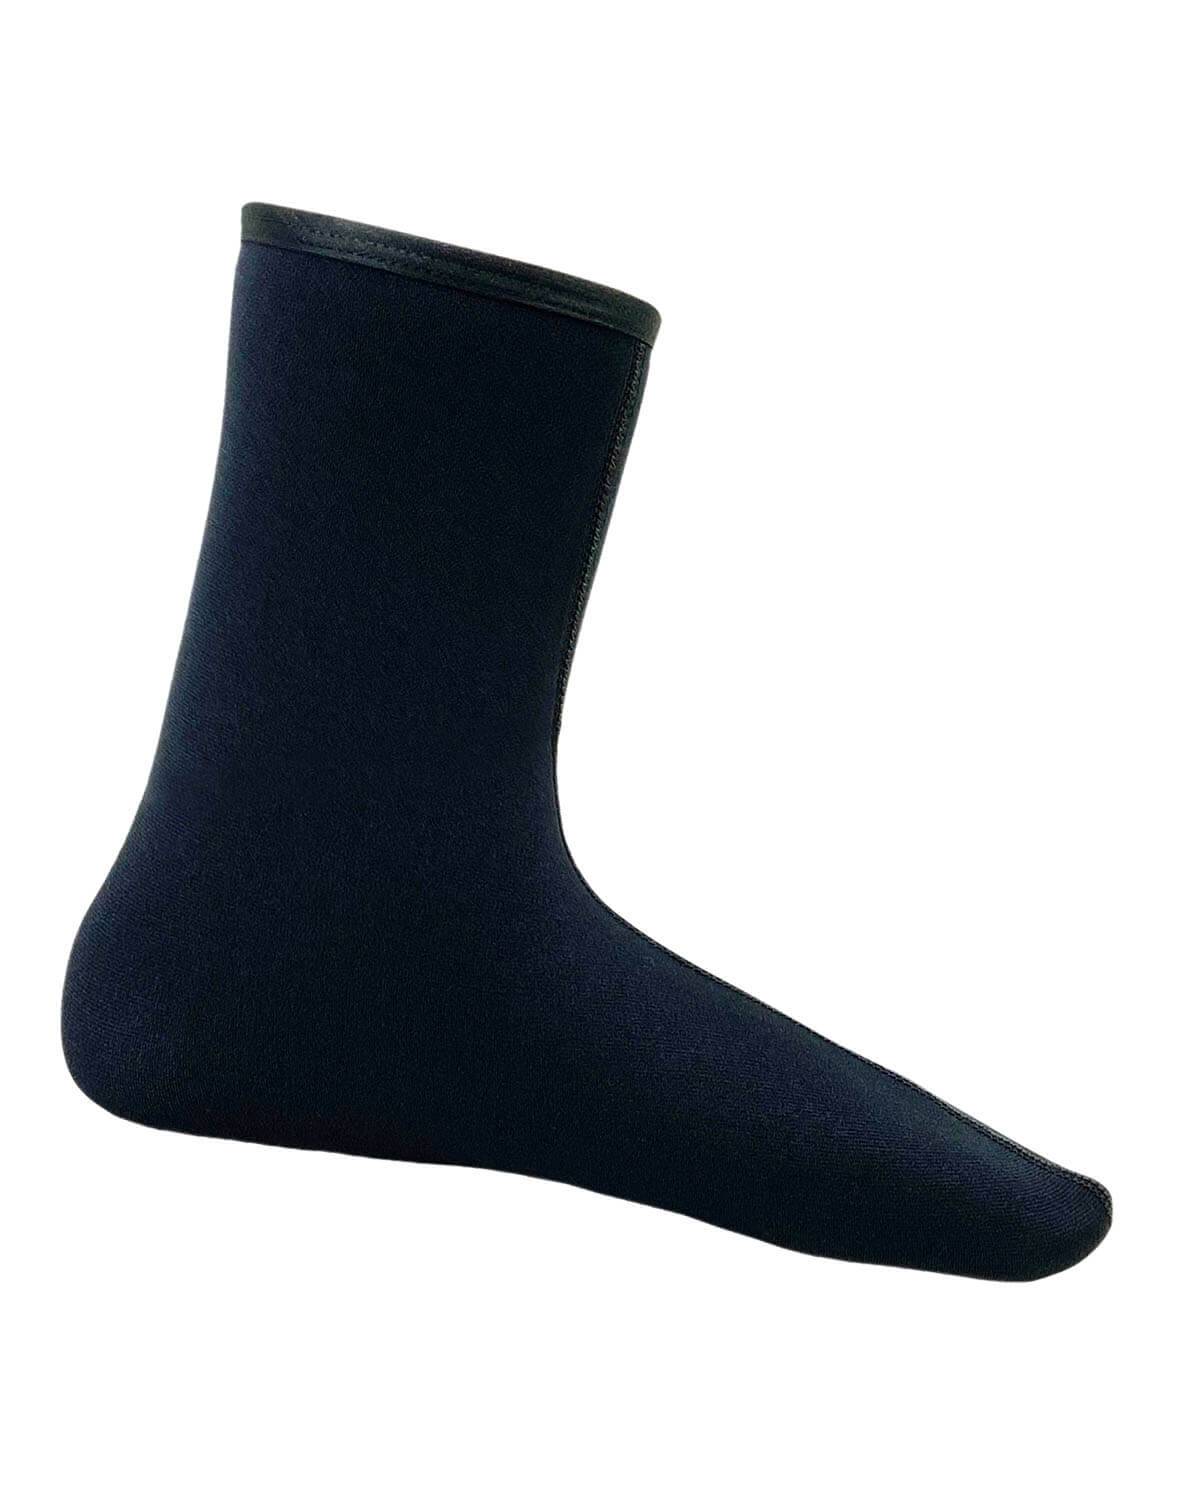 Vaikobi Vcold 2mm Neoprene Socks – OnTheWater360